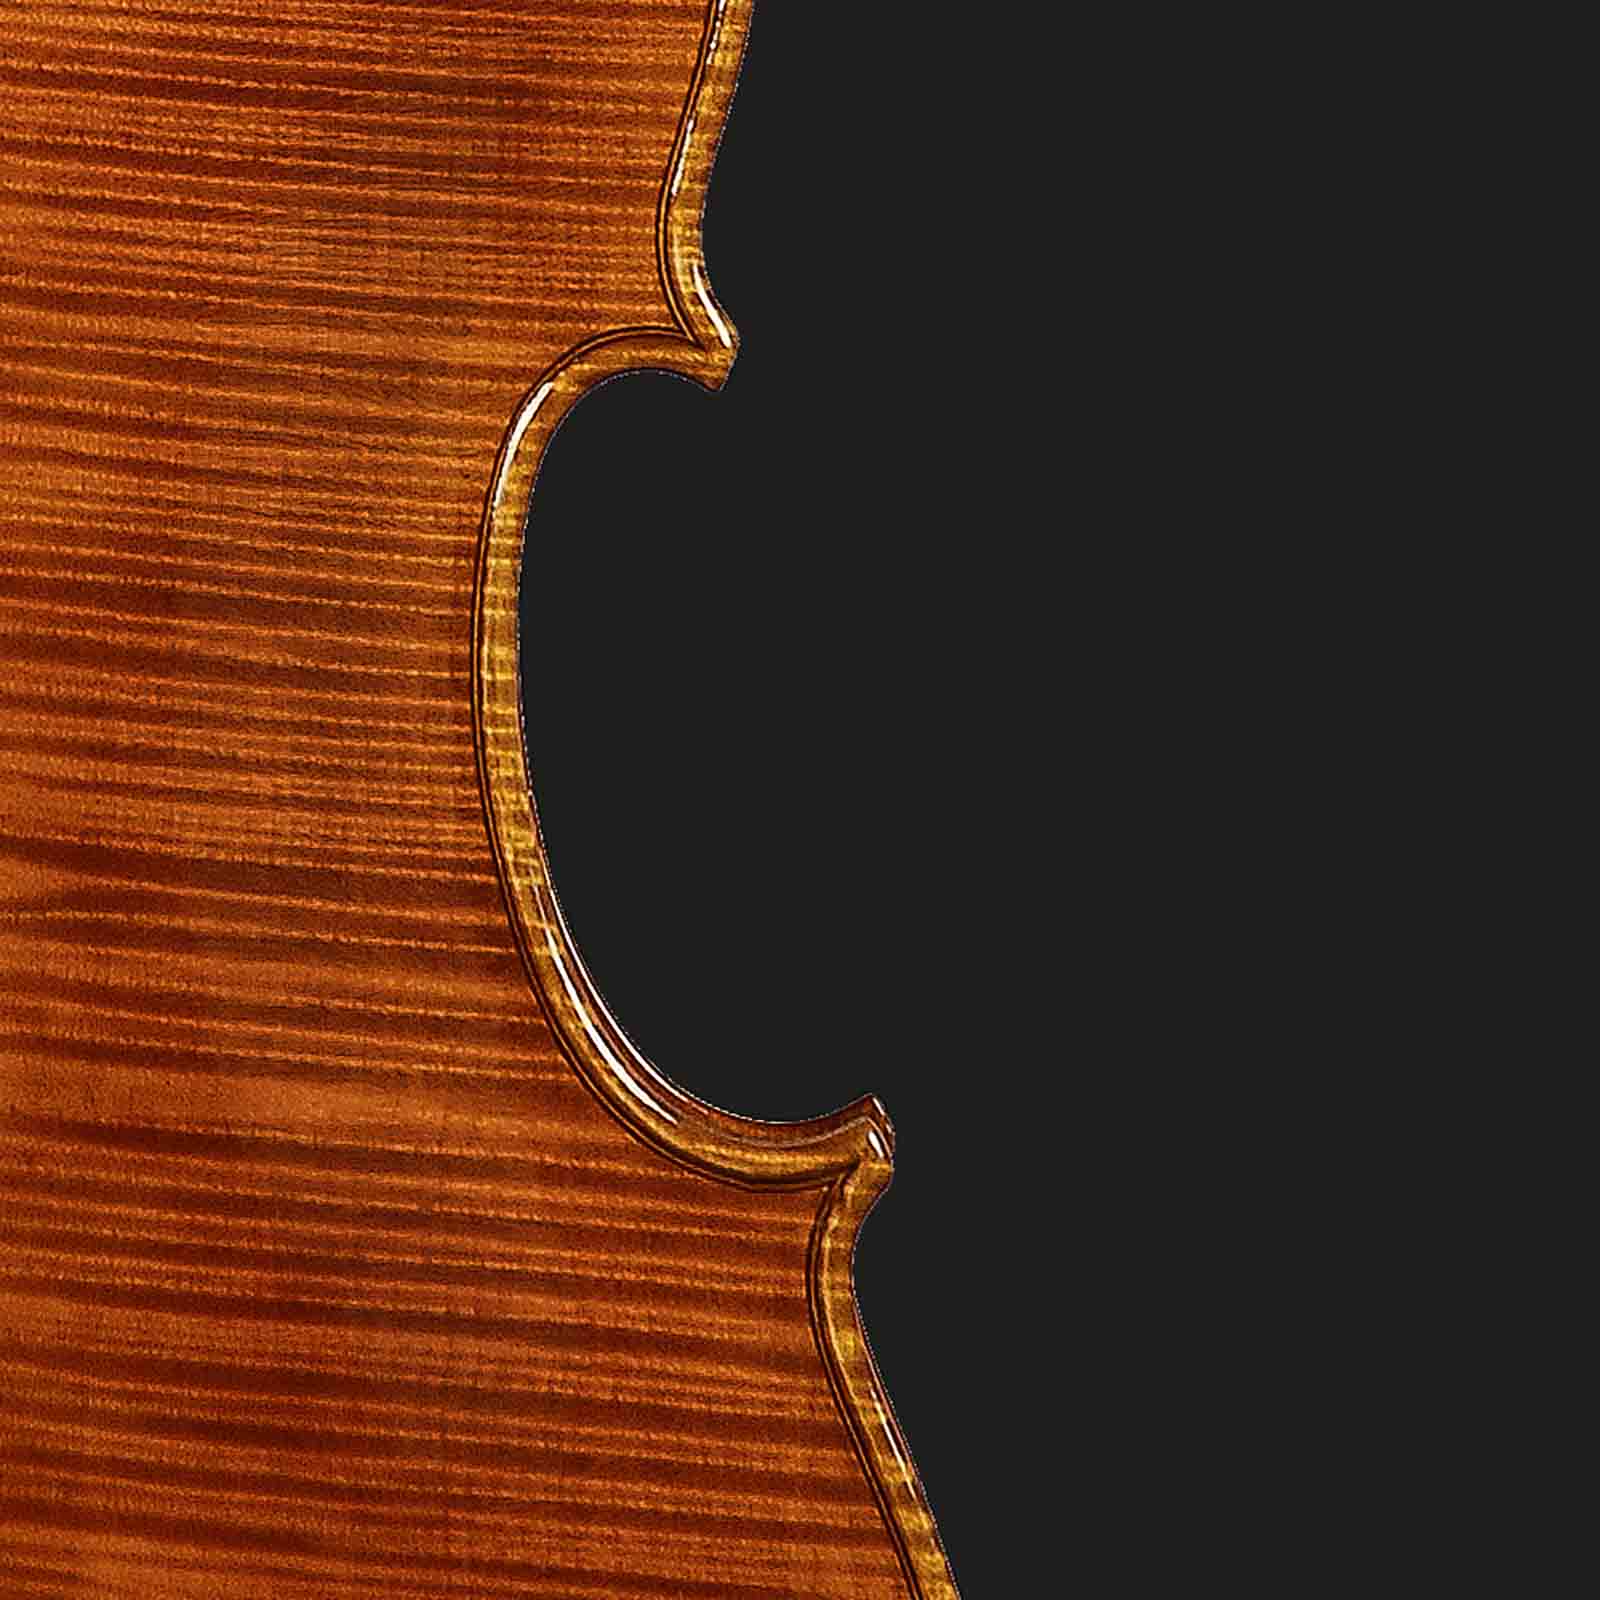 Antonio Stradivari Cremona 1690 “Tuscan“ - Image 3